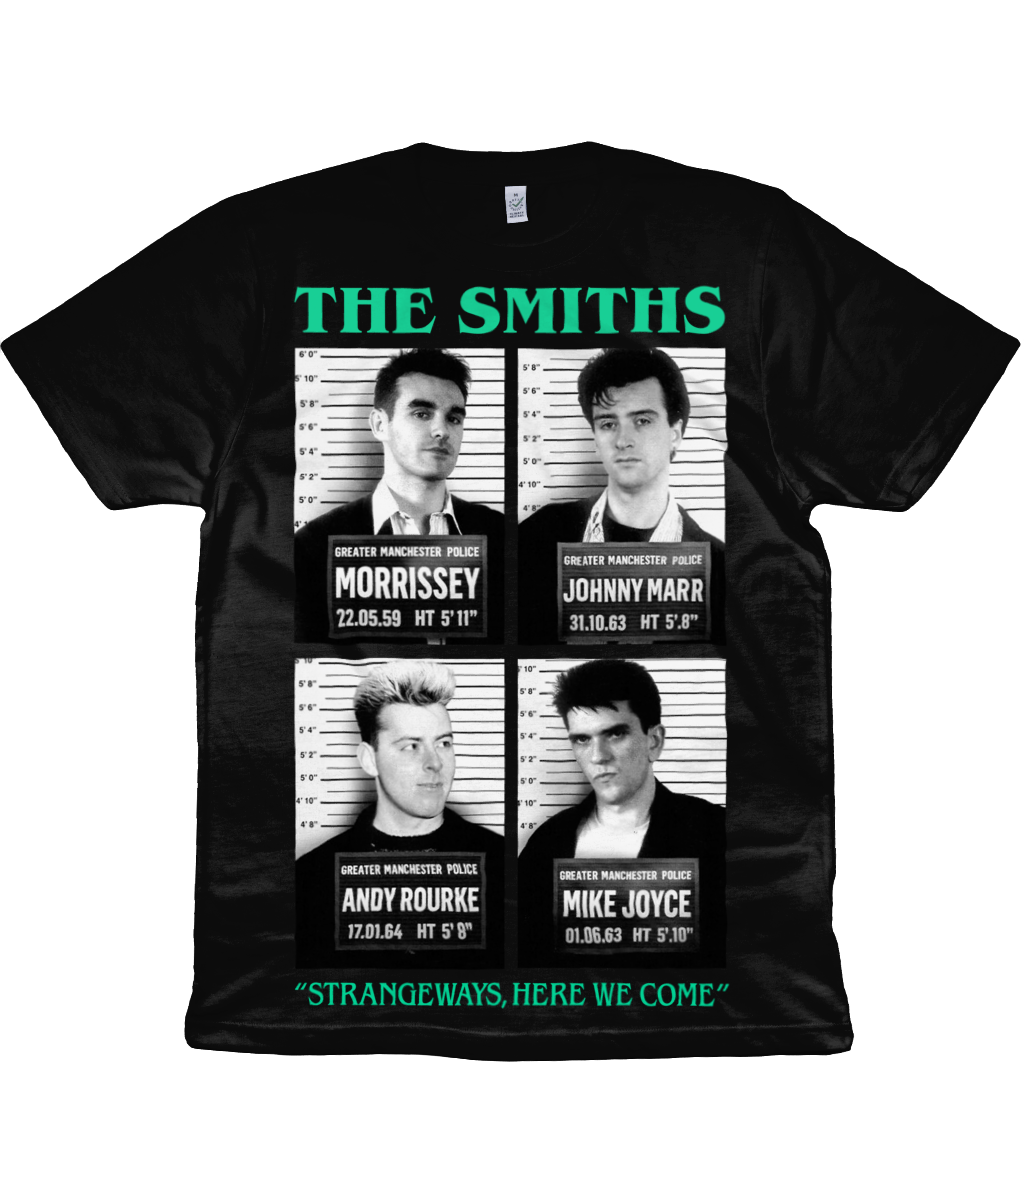 The Smiths - "STRANGEWAYS, HERE WE COME" - Mug Shots